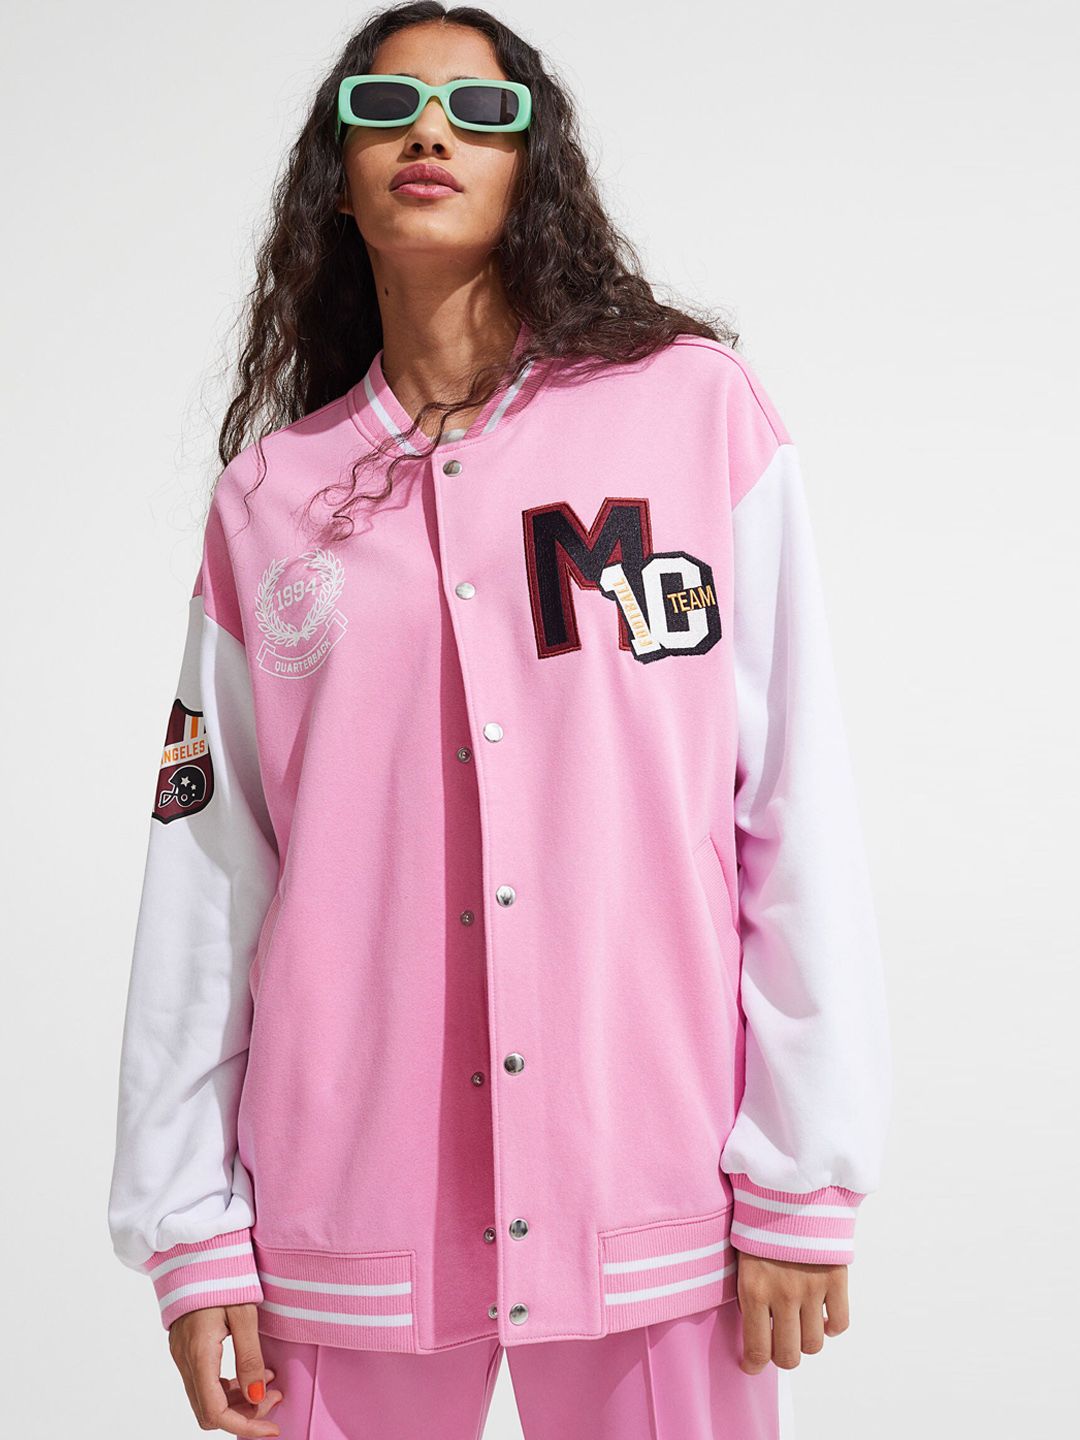 H&M Women Pink Oversized Baseball Jacket Price in India